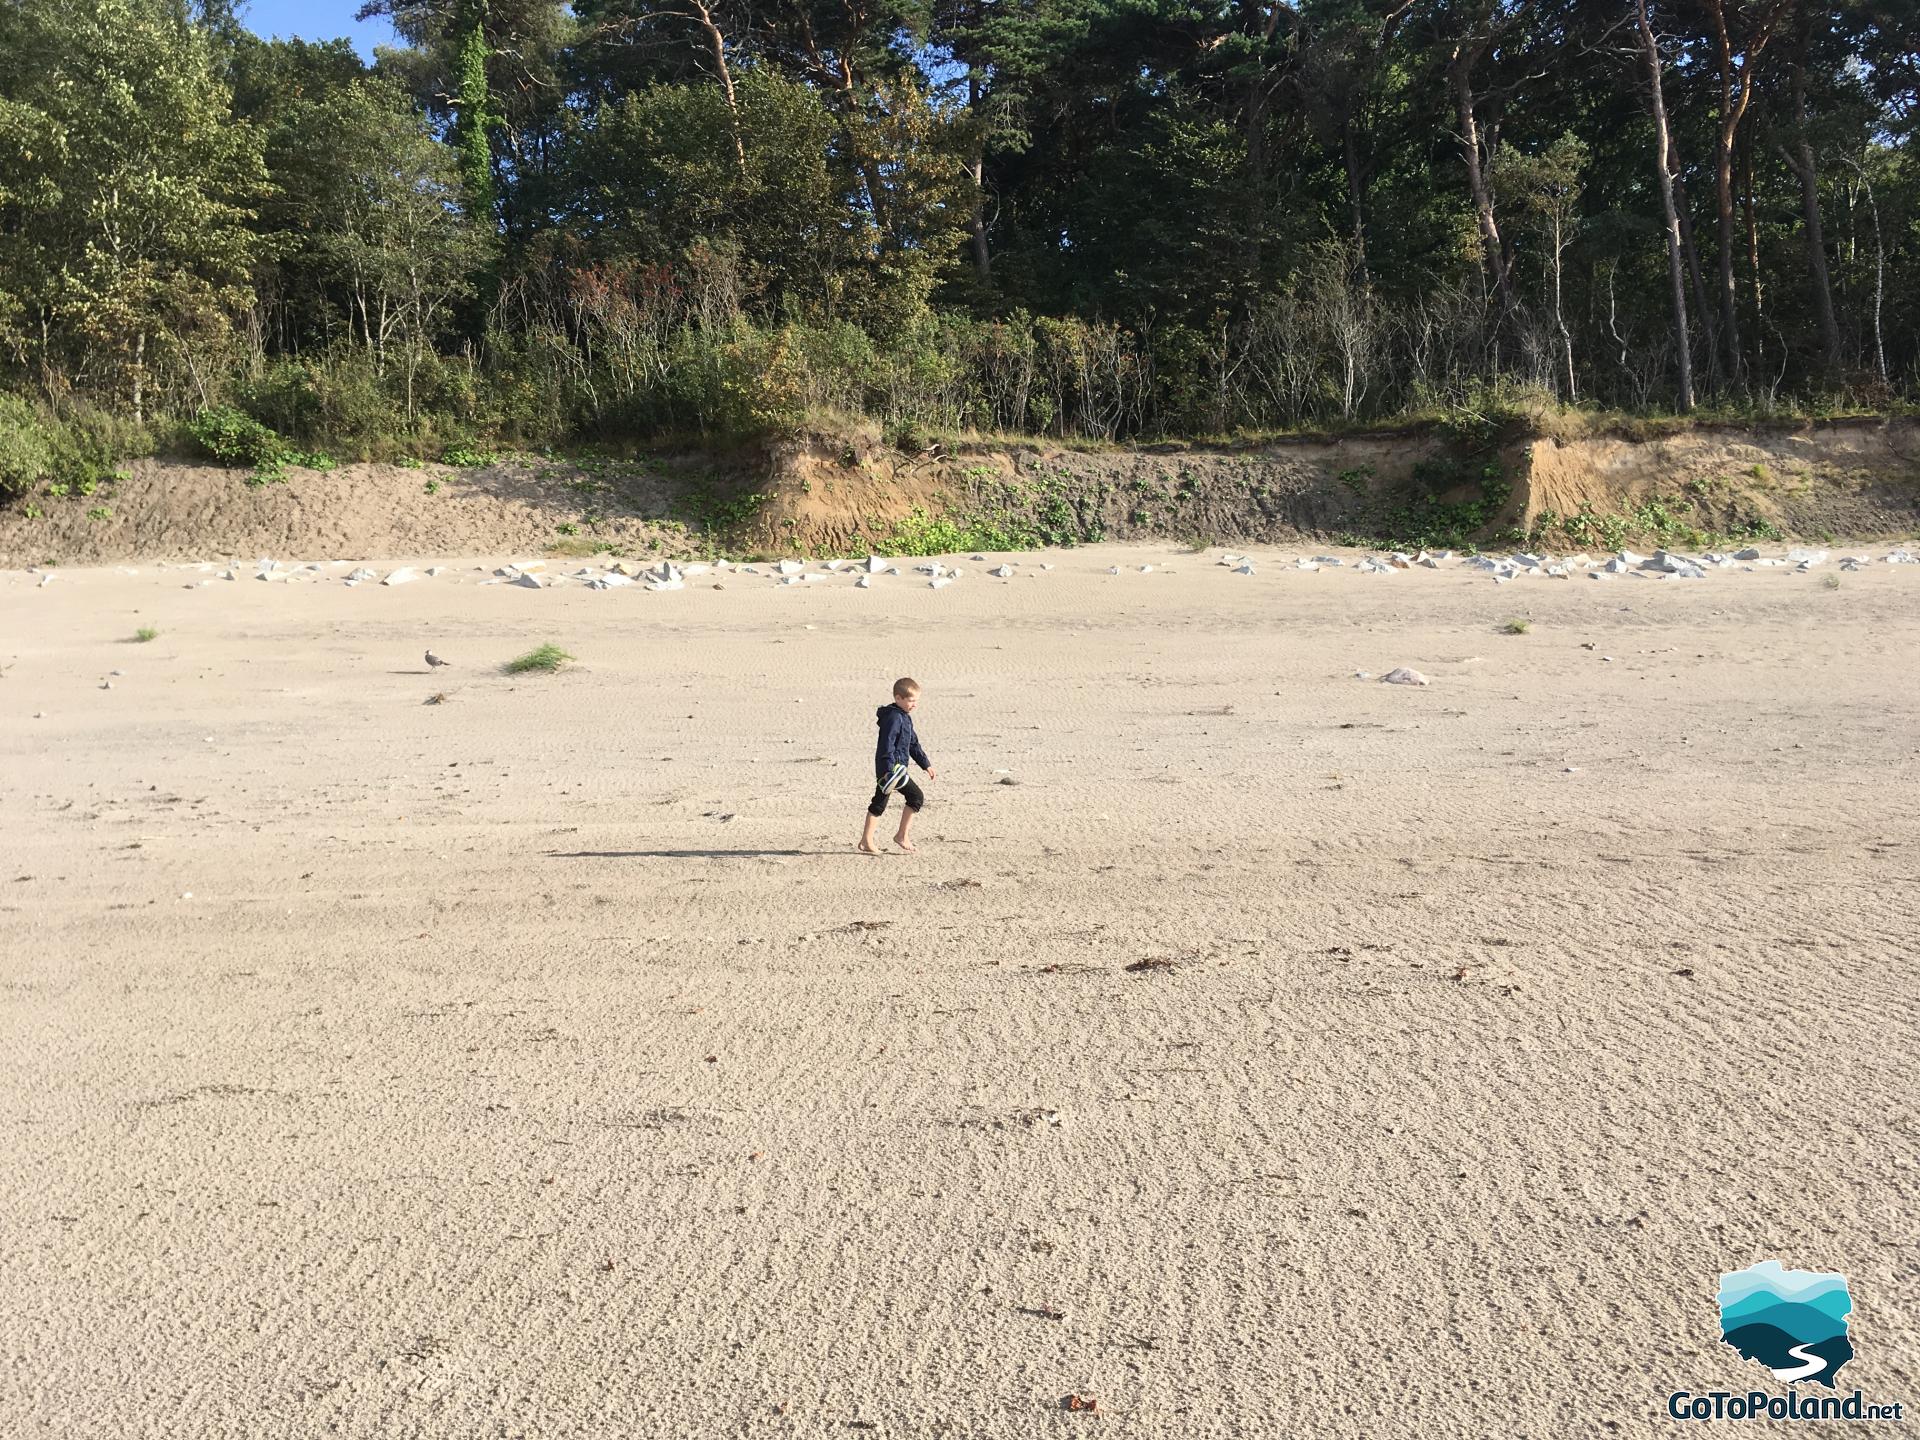 a boy on a wide, sandy beach